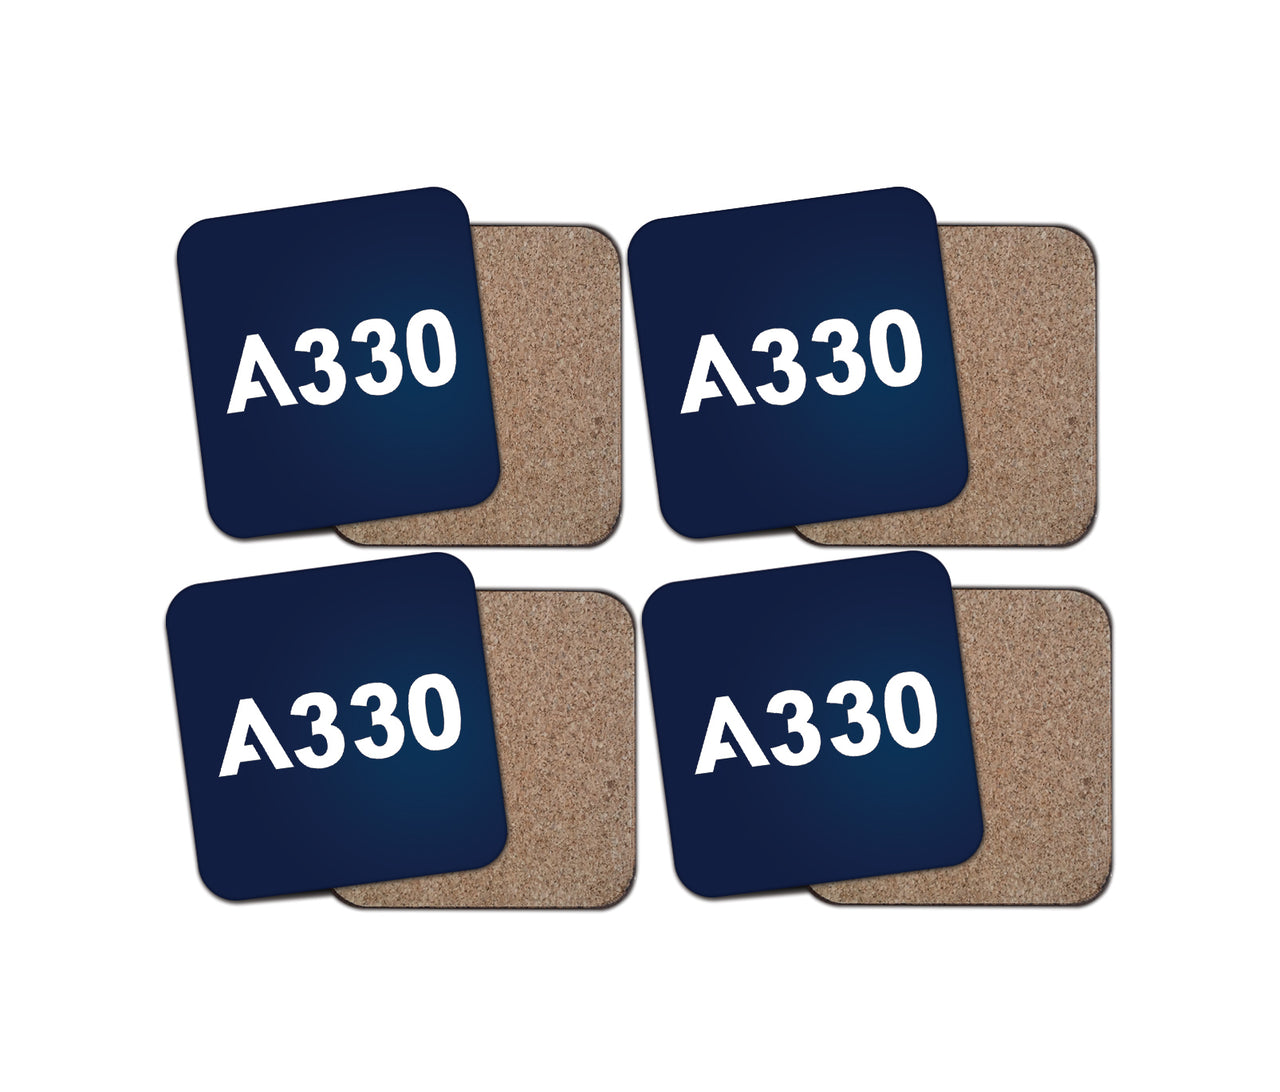 A330 Flat Text Designed Coasters